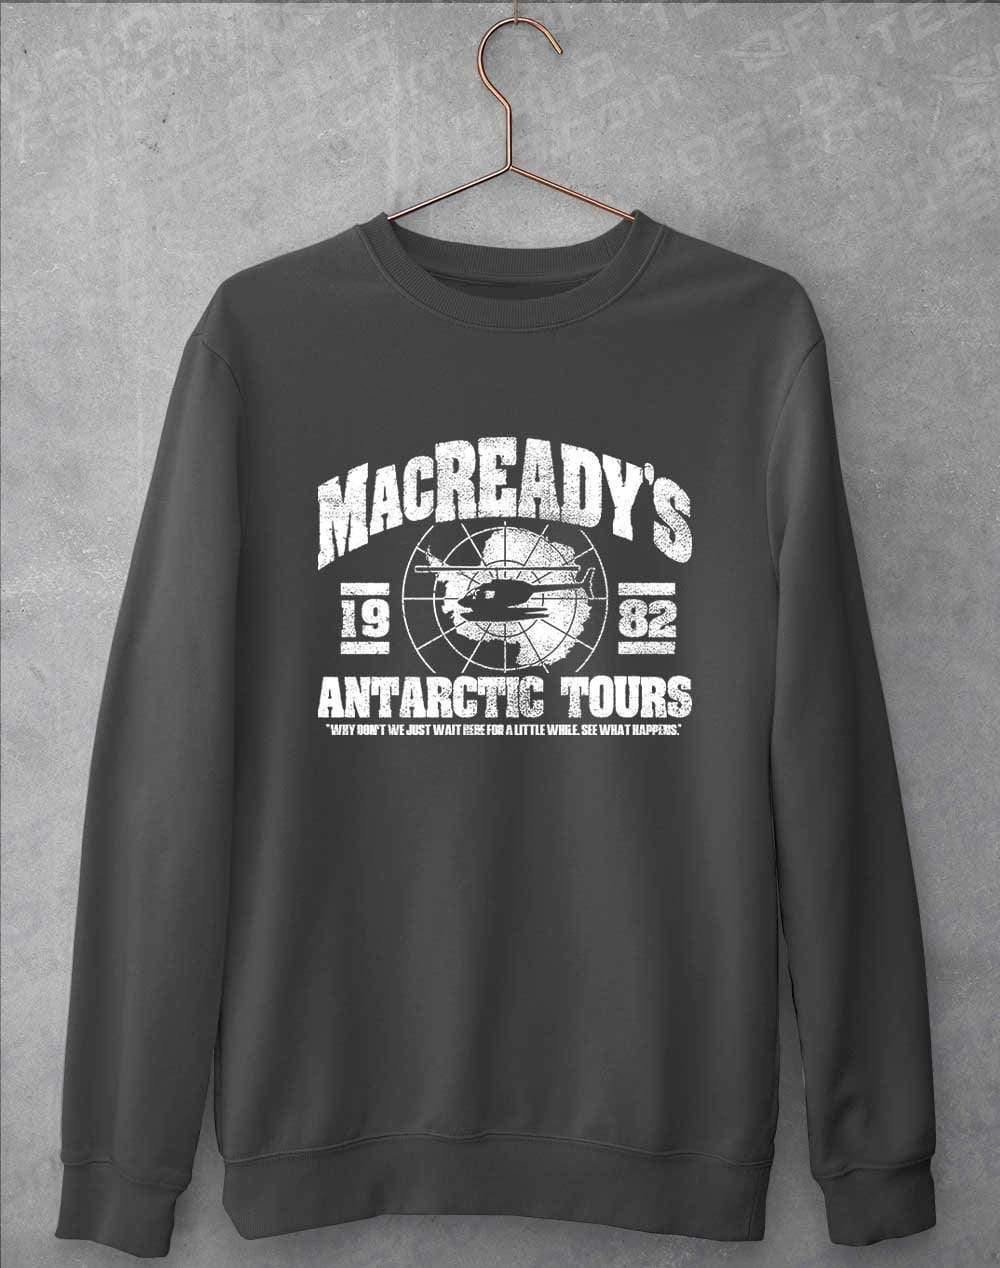 MacReady's Antarctic Tours 1982 Sweatshirt S / Charcoal  - Off World Tees